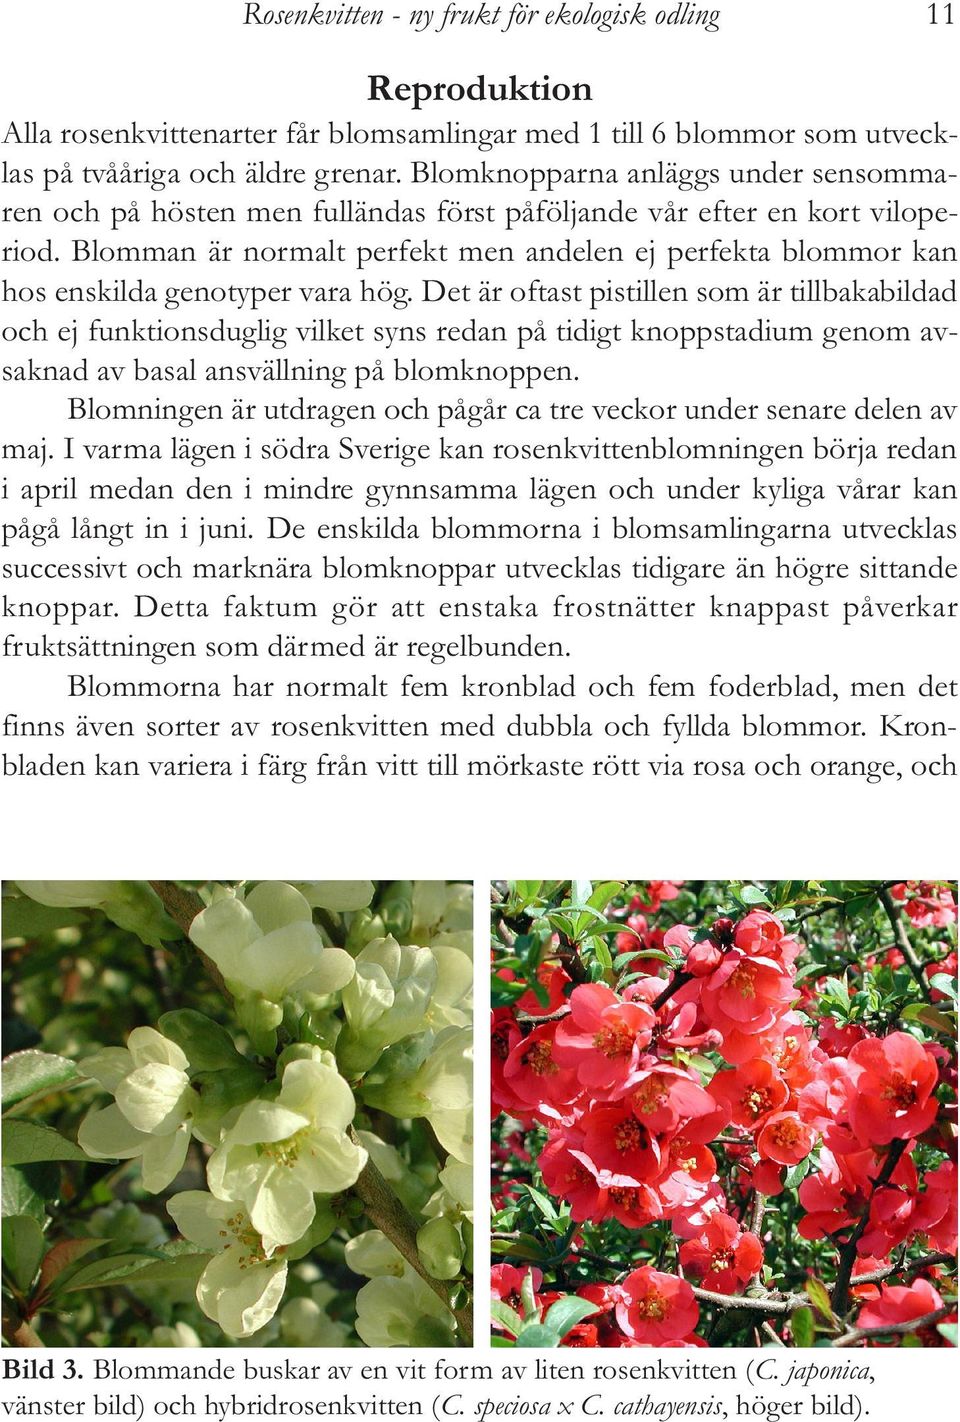 Rosenkvitten ny frukt för ekologisk odling Kimmo Rumpunen - PDF ...